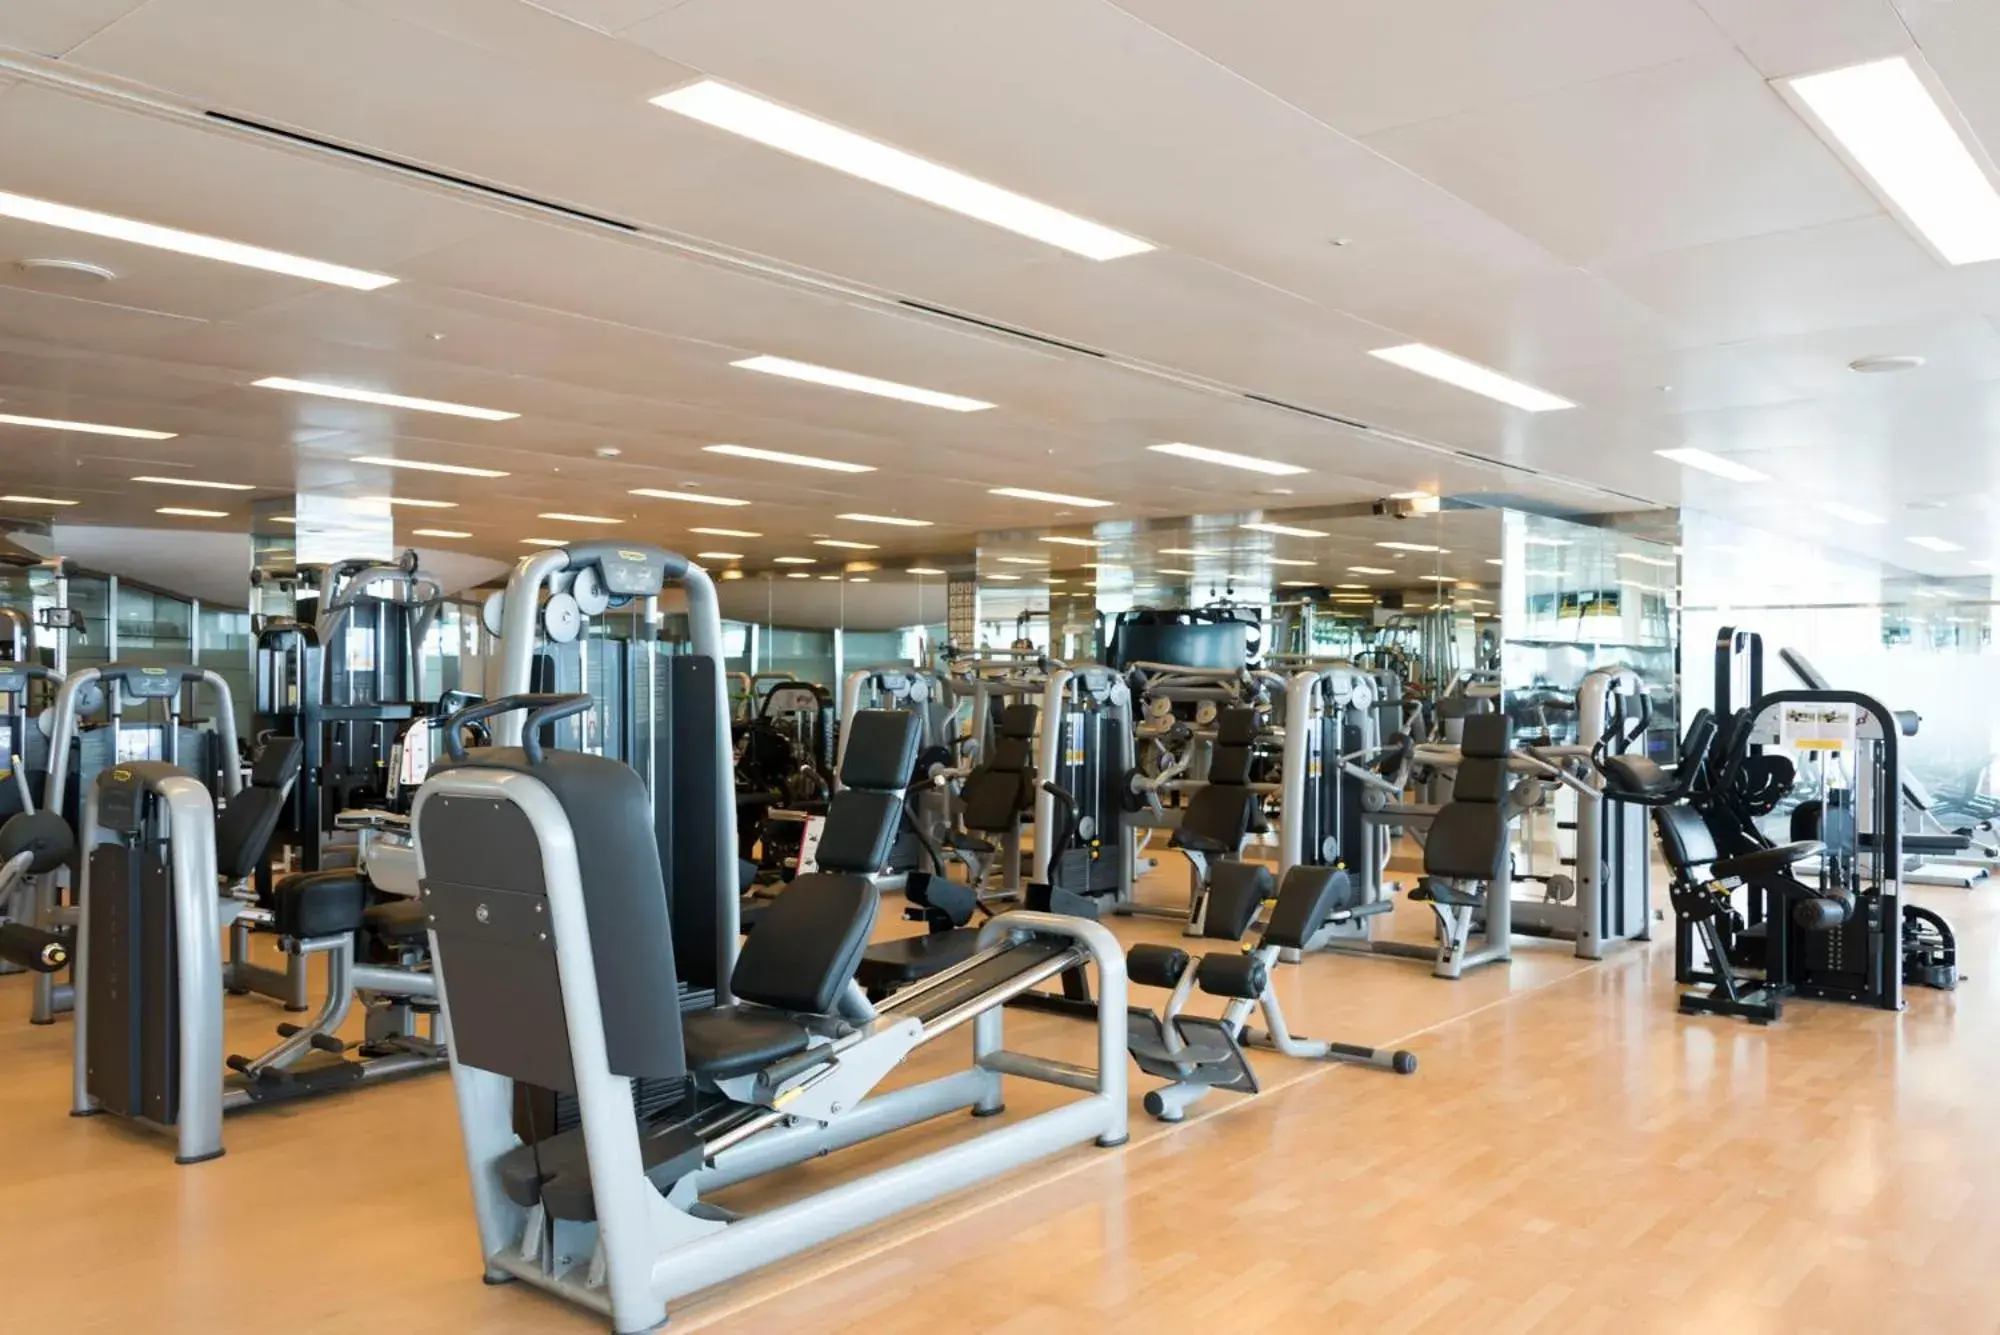 Fitness centre/facilities, Fitness Center/Facilities in Vista Walkerhill Seoul